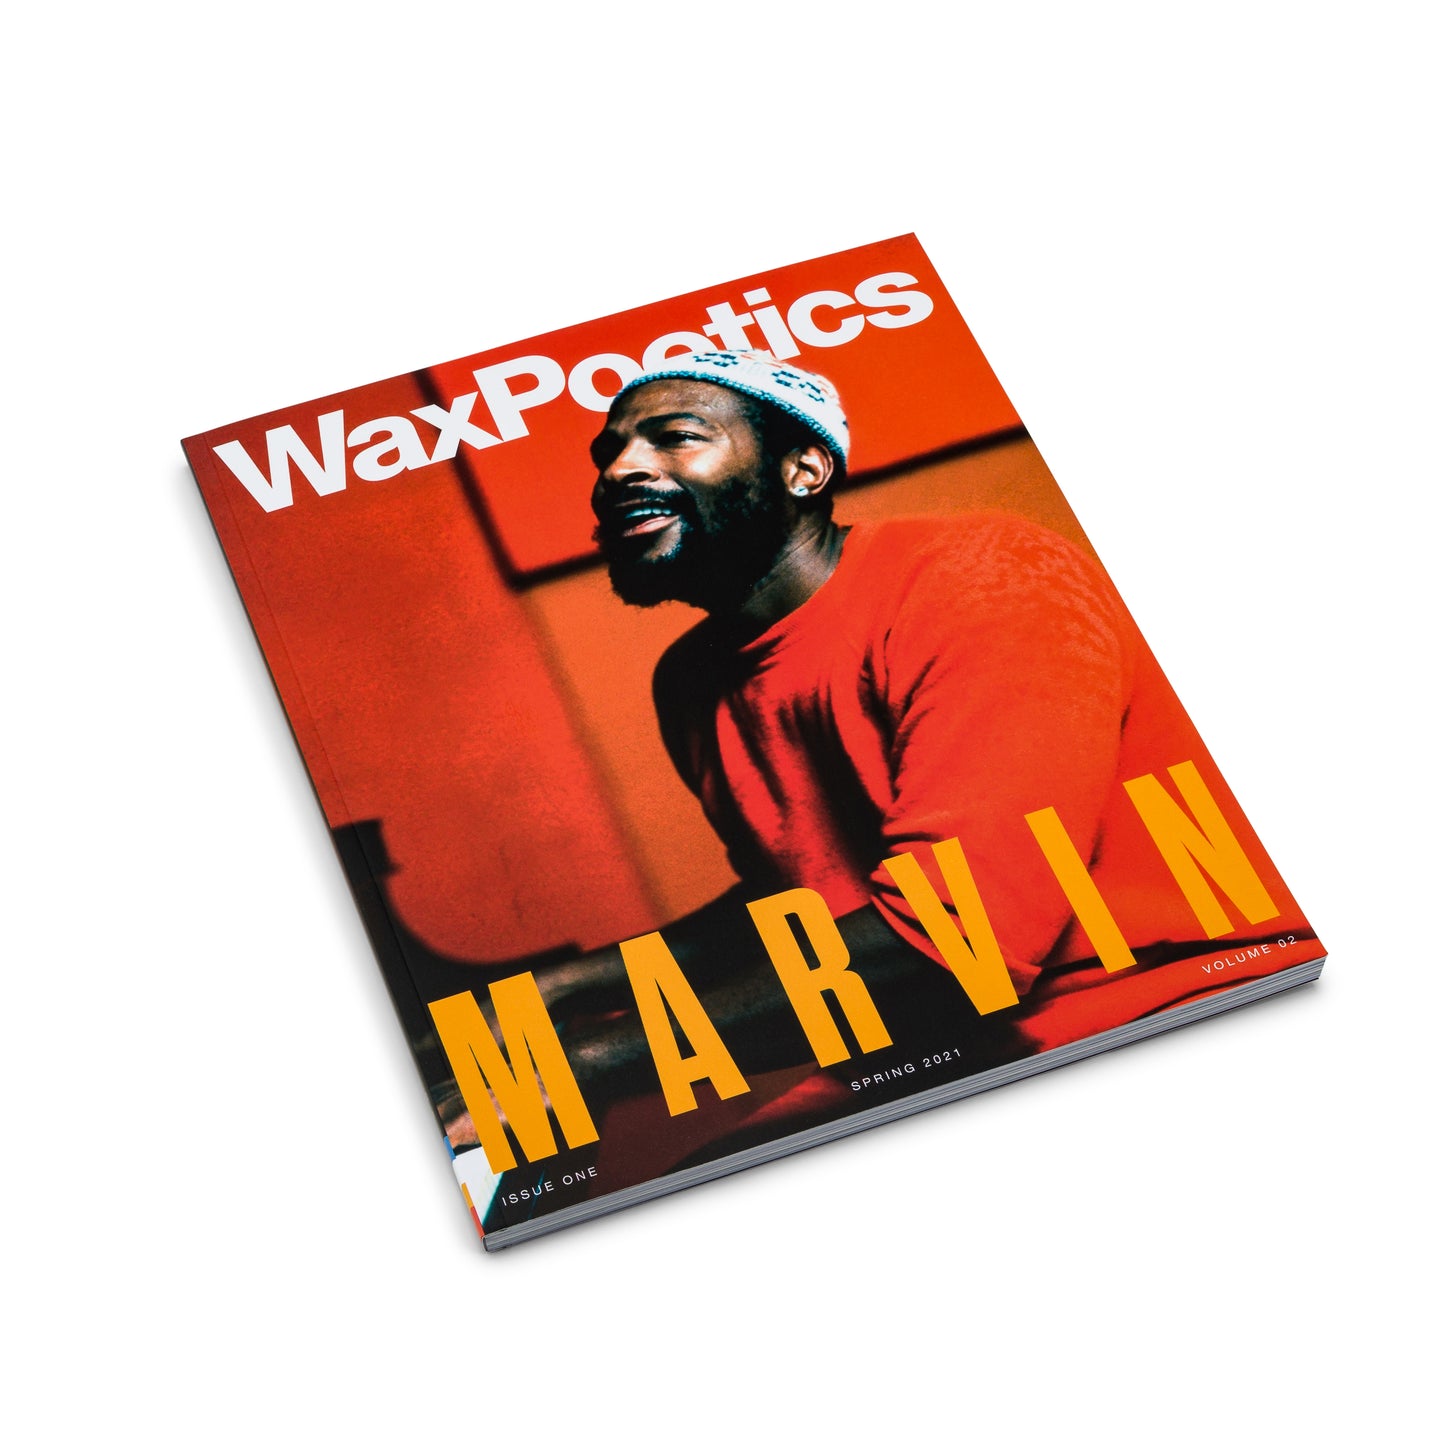 Wax Poetics Vol.2, Issue 01, Original print run [Marvin Gaye / Tammi Terrell]